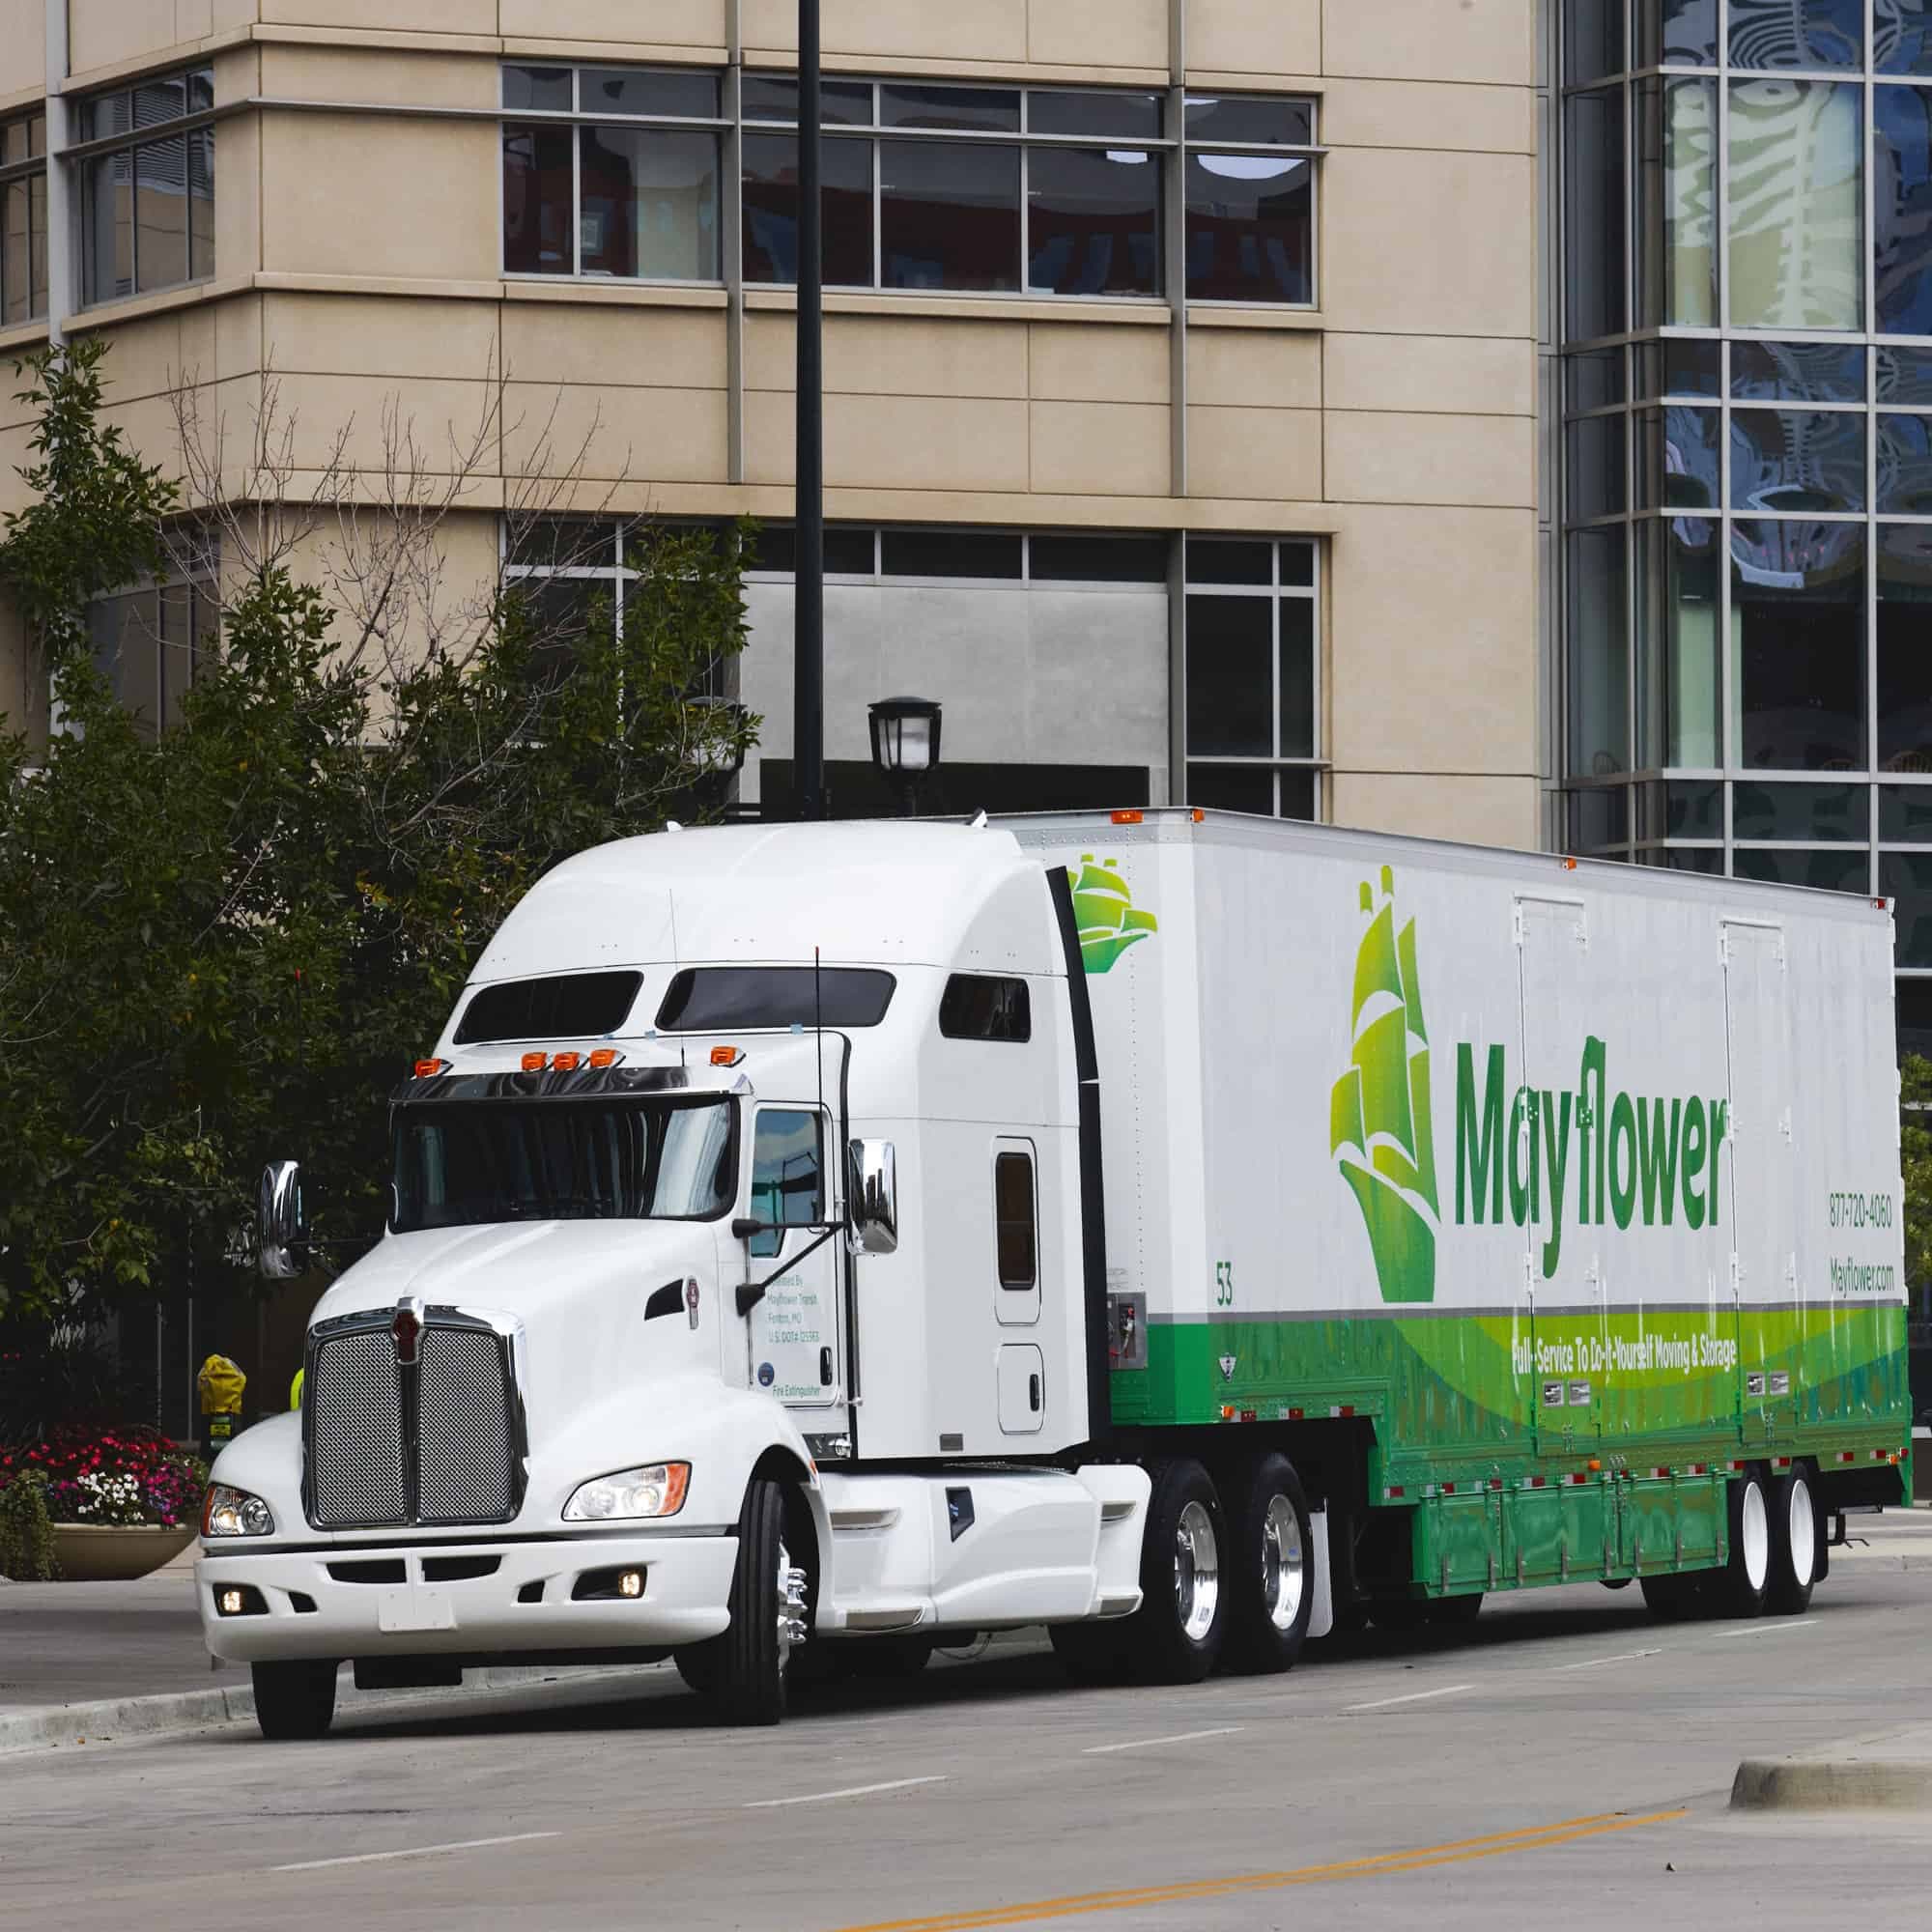 mayflower moving truck driving through downtown - Mayflower®